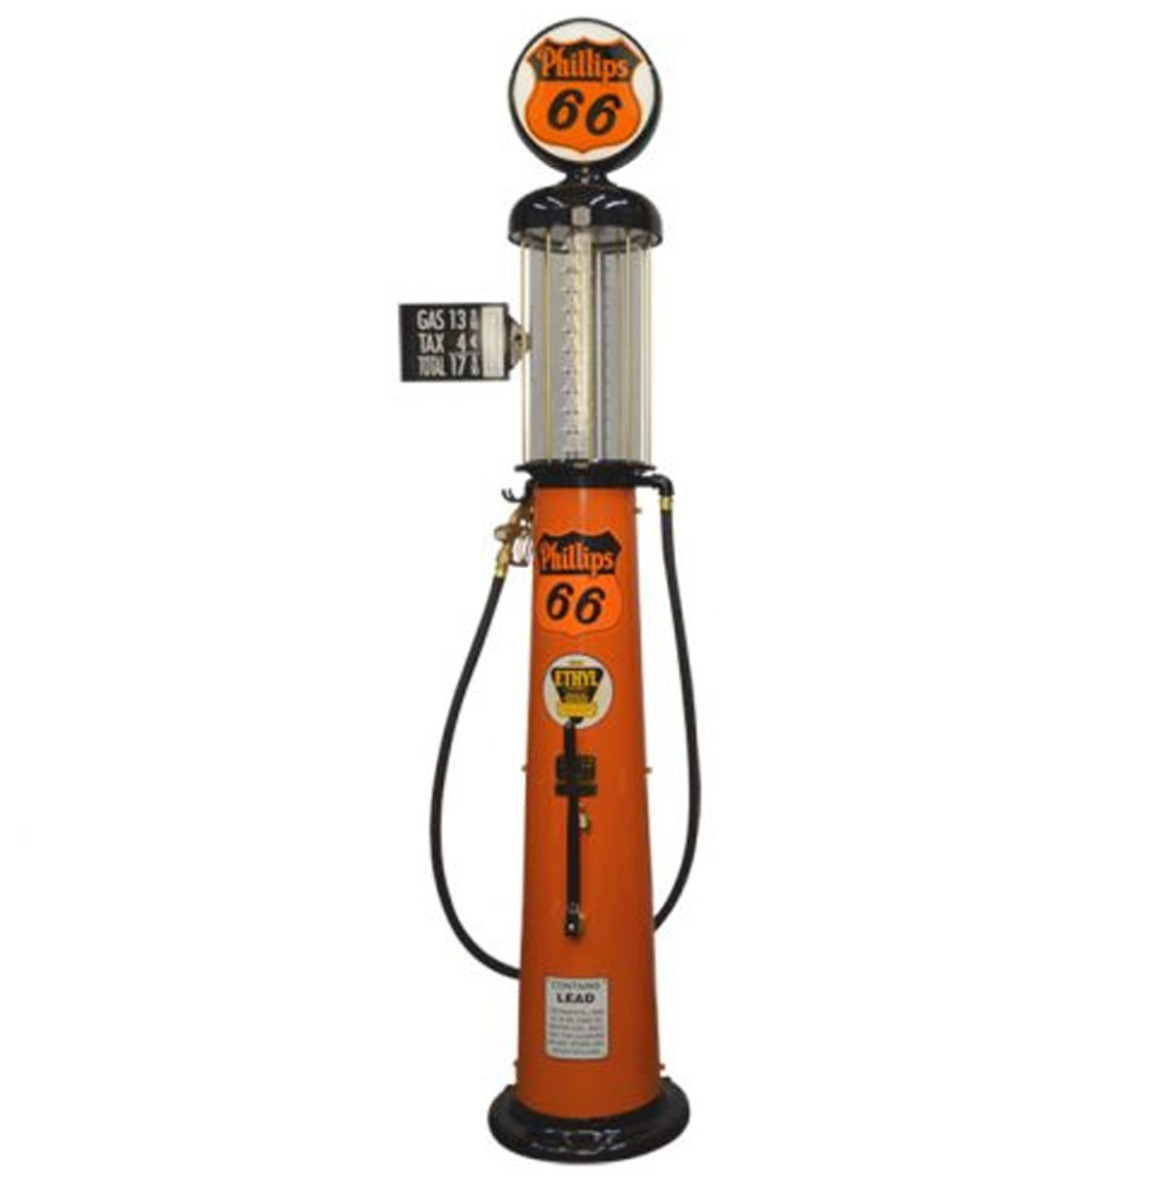 Wayne 615 Phillips 66 Ethyl 10 Gallon Benzinepomp - Oranje & Zwart - Reproductie